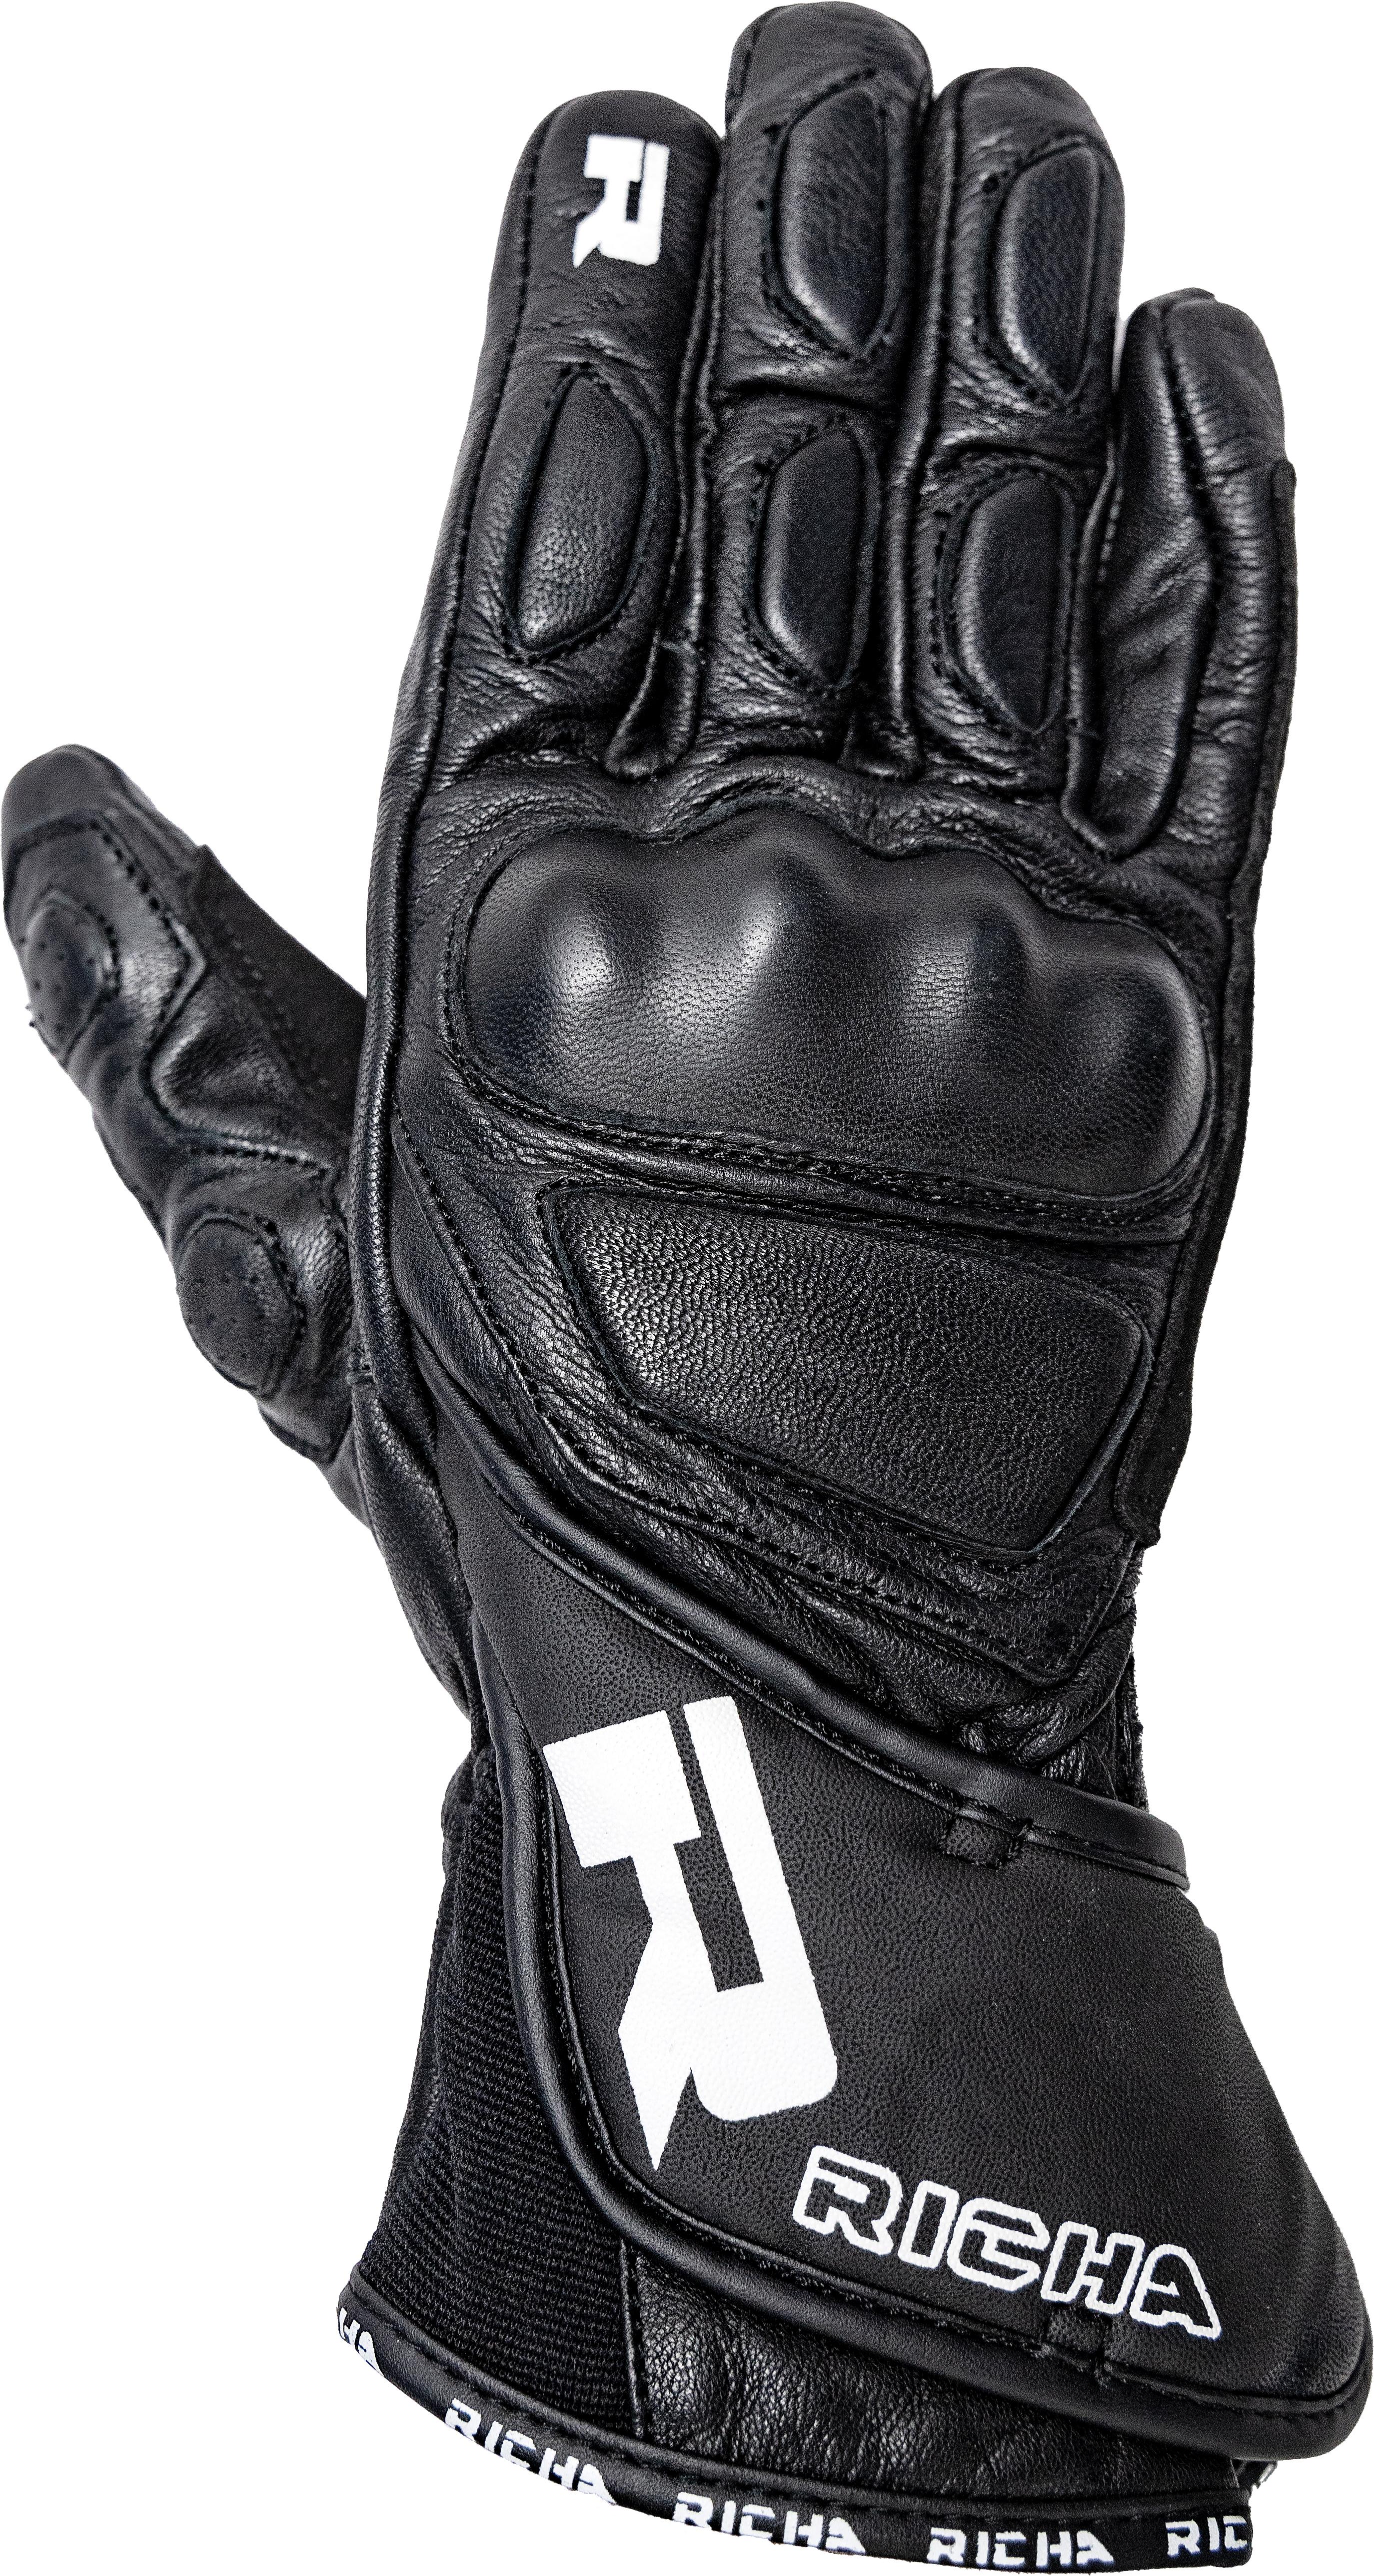 Richa Wss Motorcycle Gloves - Black, X Large